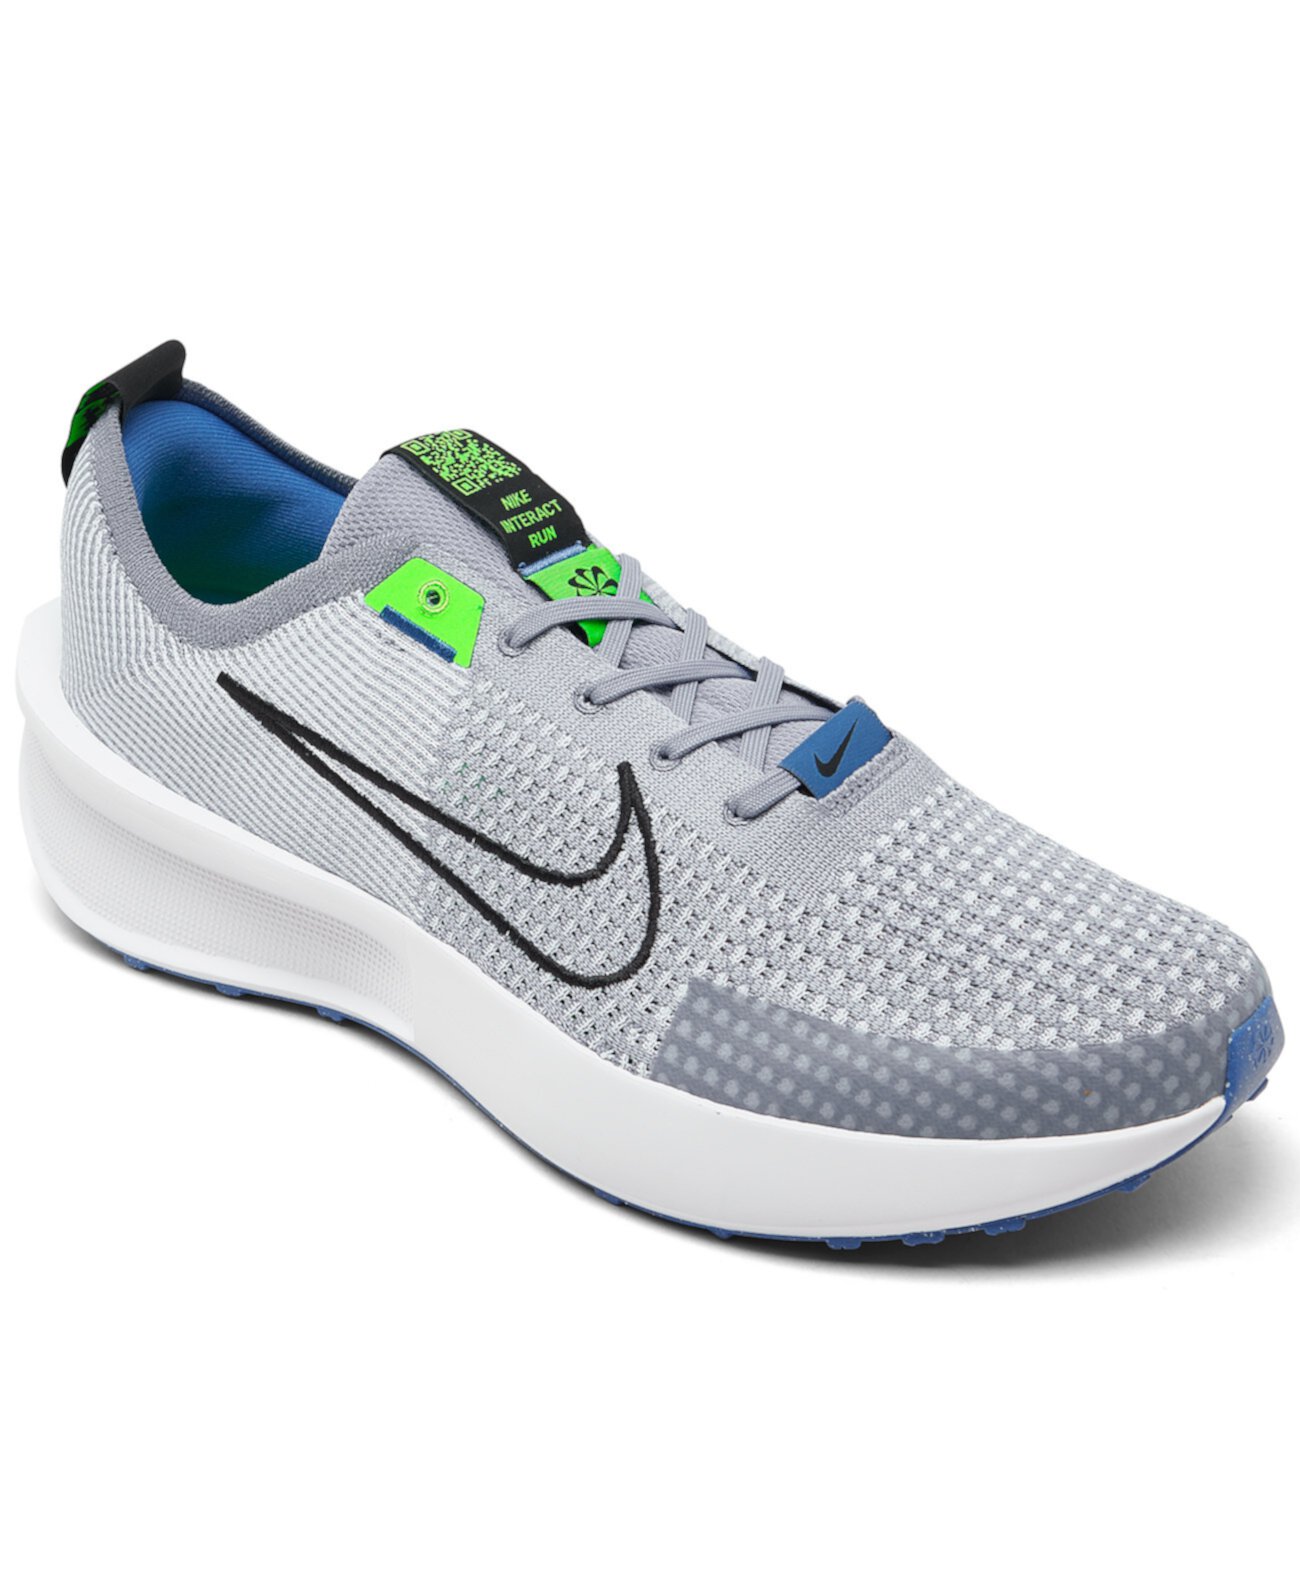 Мужские кроссовки для бега Nike Interact Run из коллекции Finish Line Nike